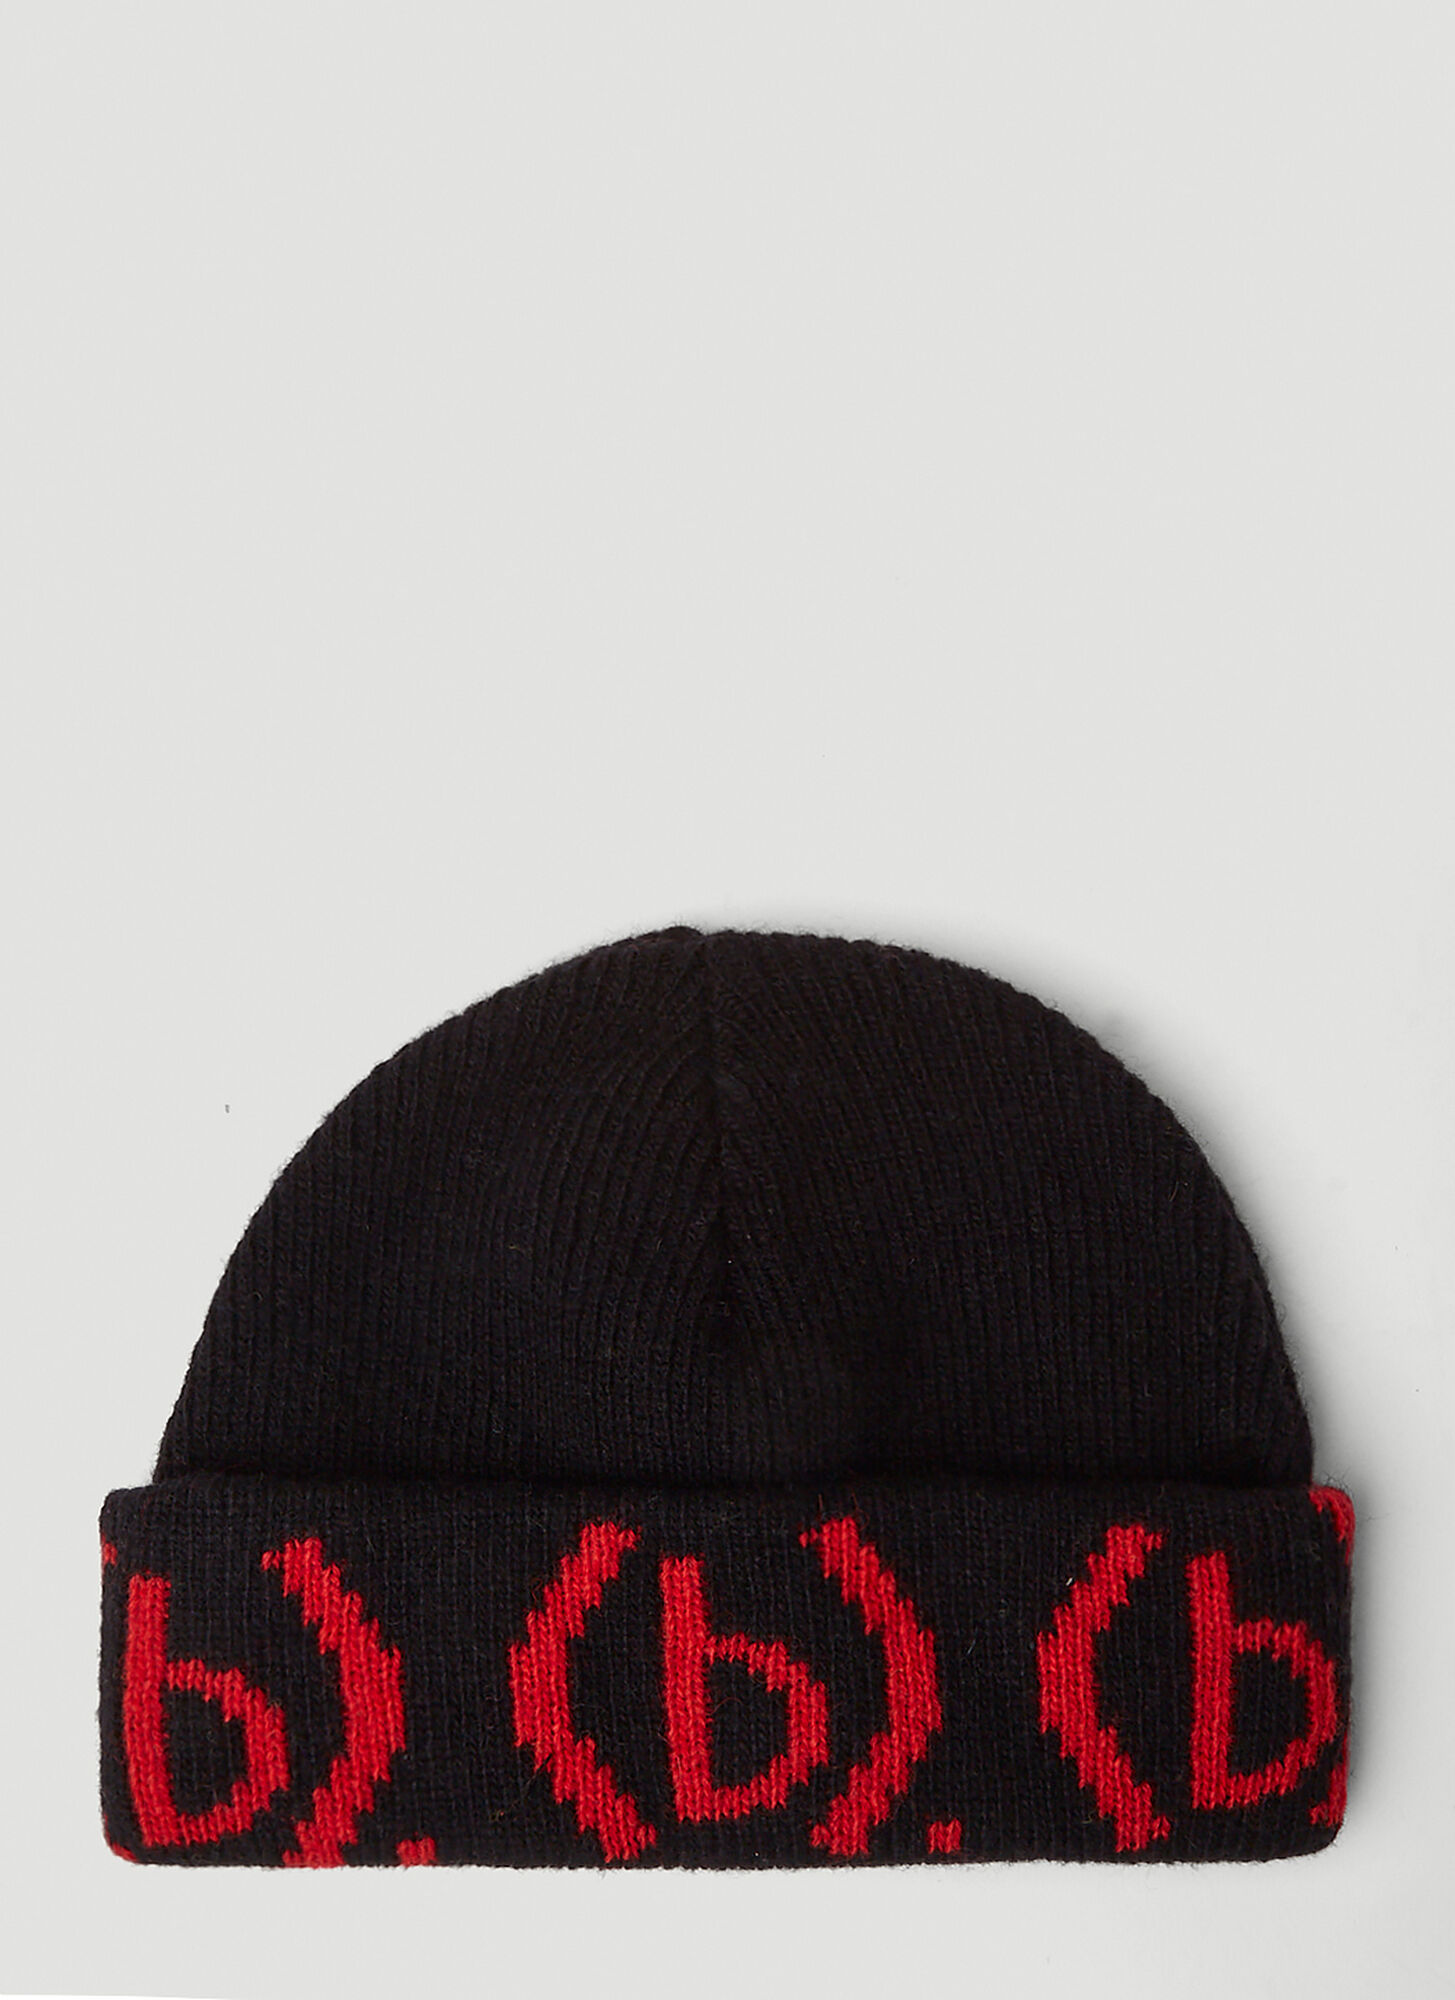 Bstroy Knit (b).eanie Hat In Black